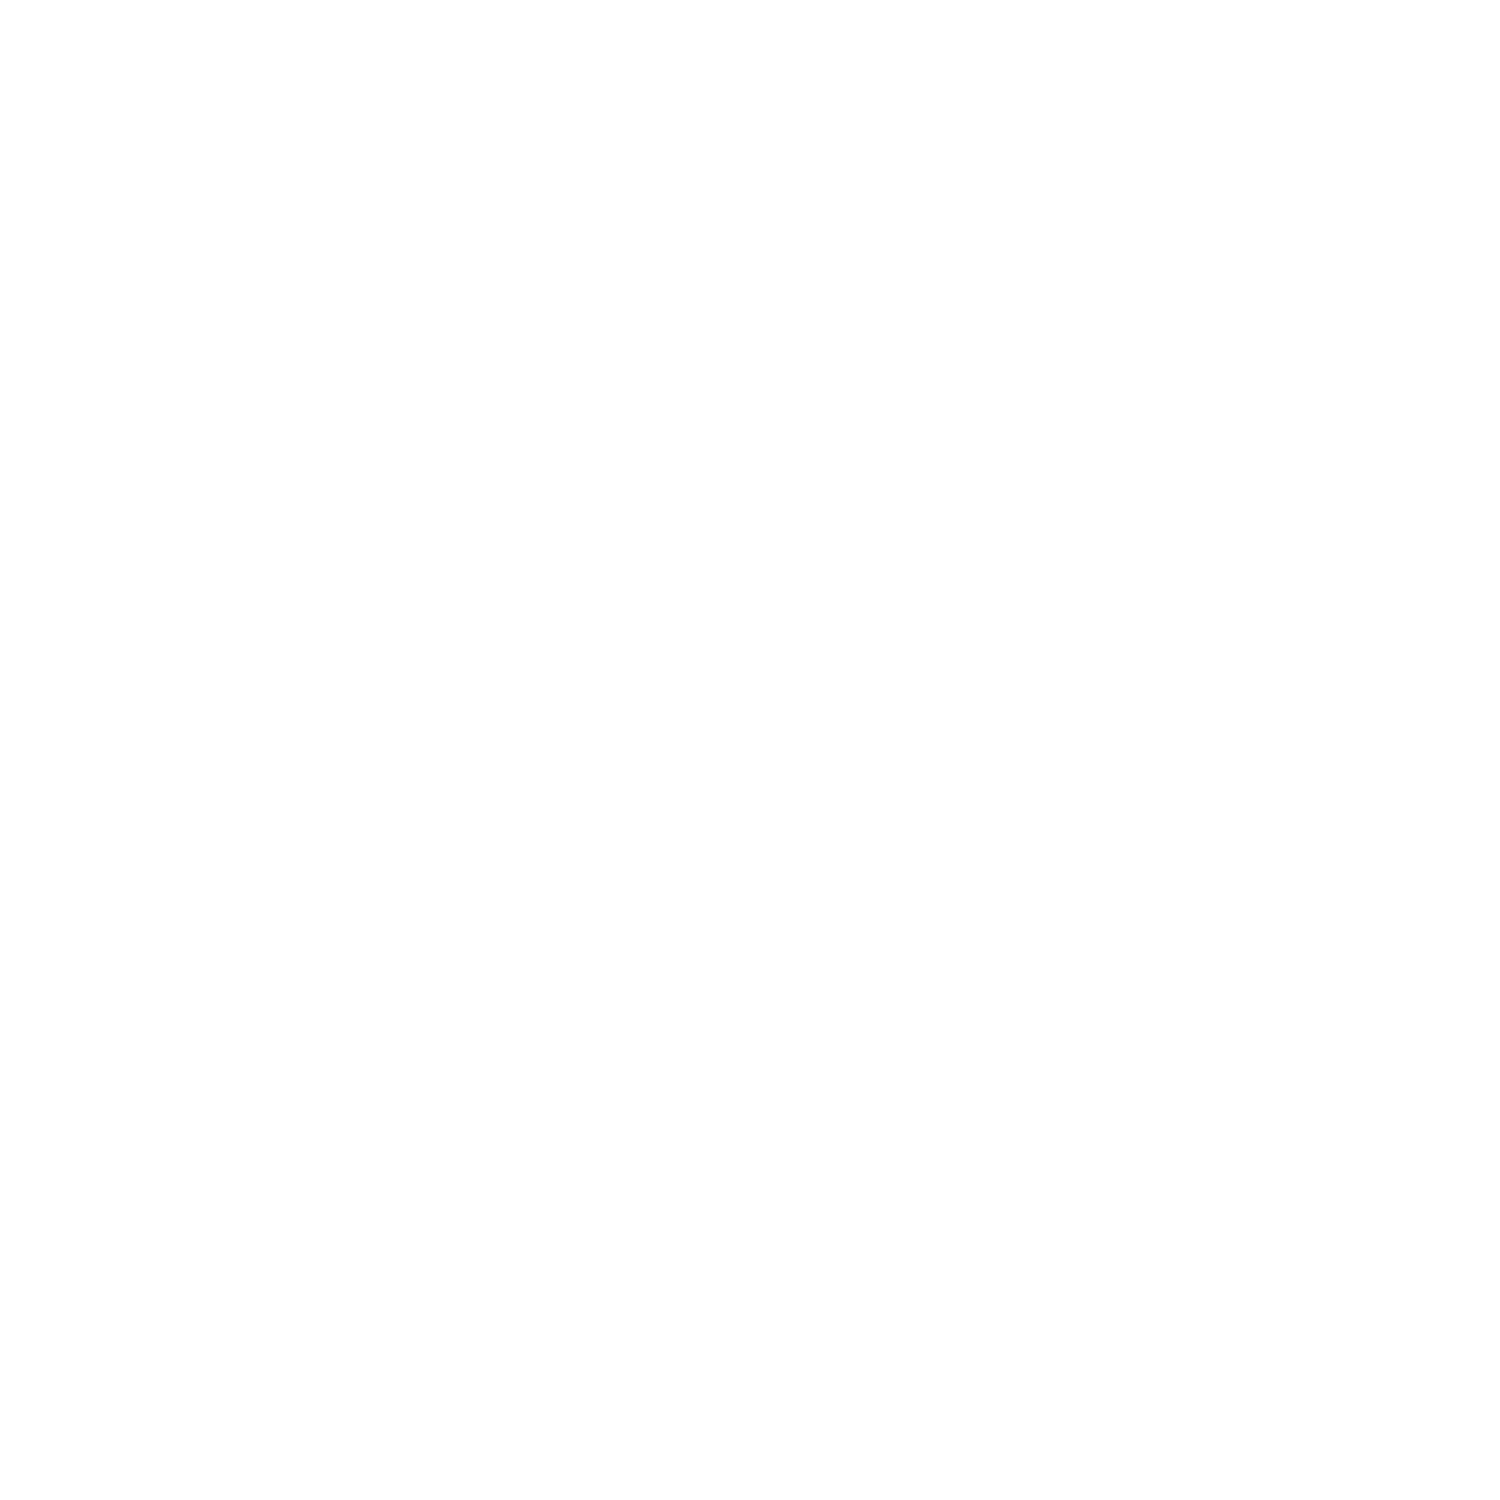 https://allstarmusicempire.com/wp-content/uploads/2021/09/ame-logo-wht-lg-v2.png